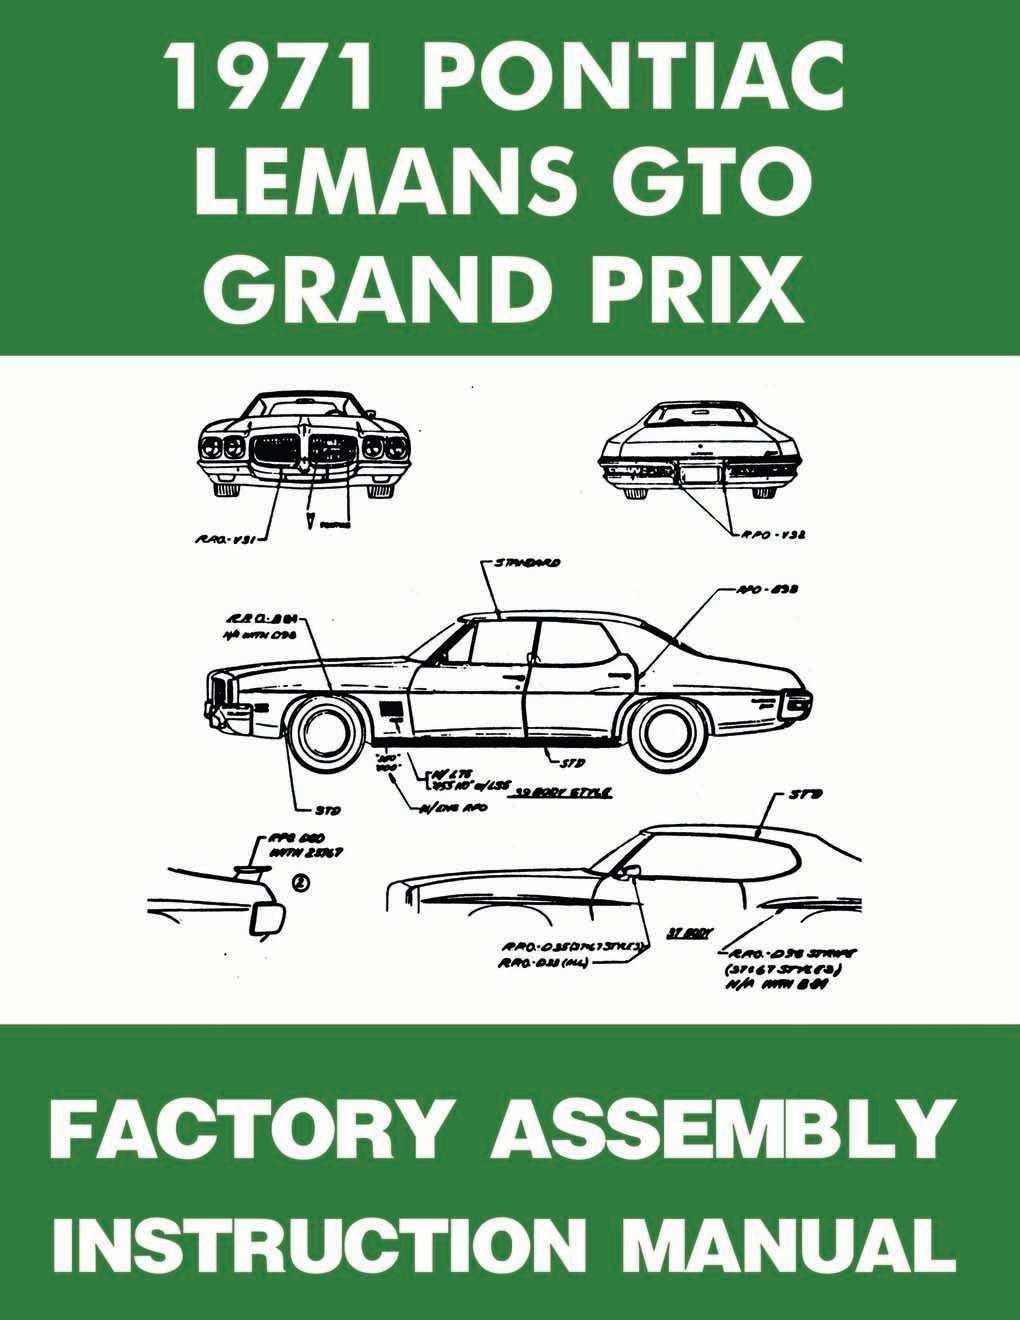 Factory Assembly Manual 1971 Pontiac GTO, Lemans &